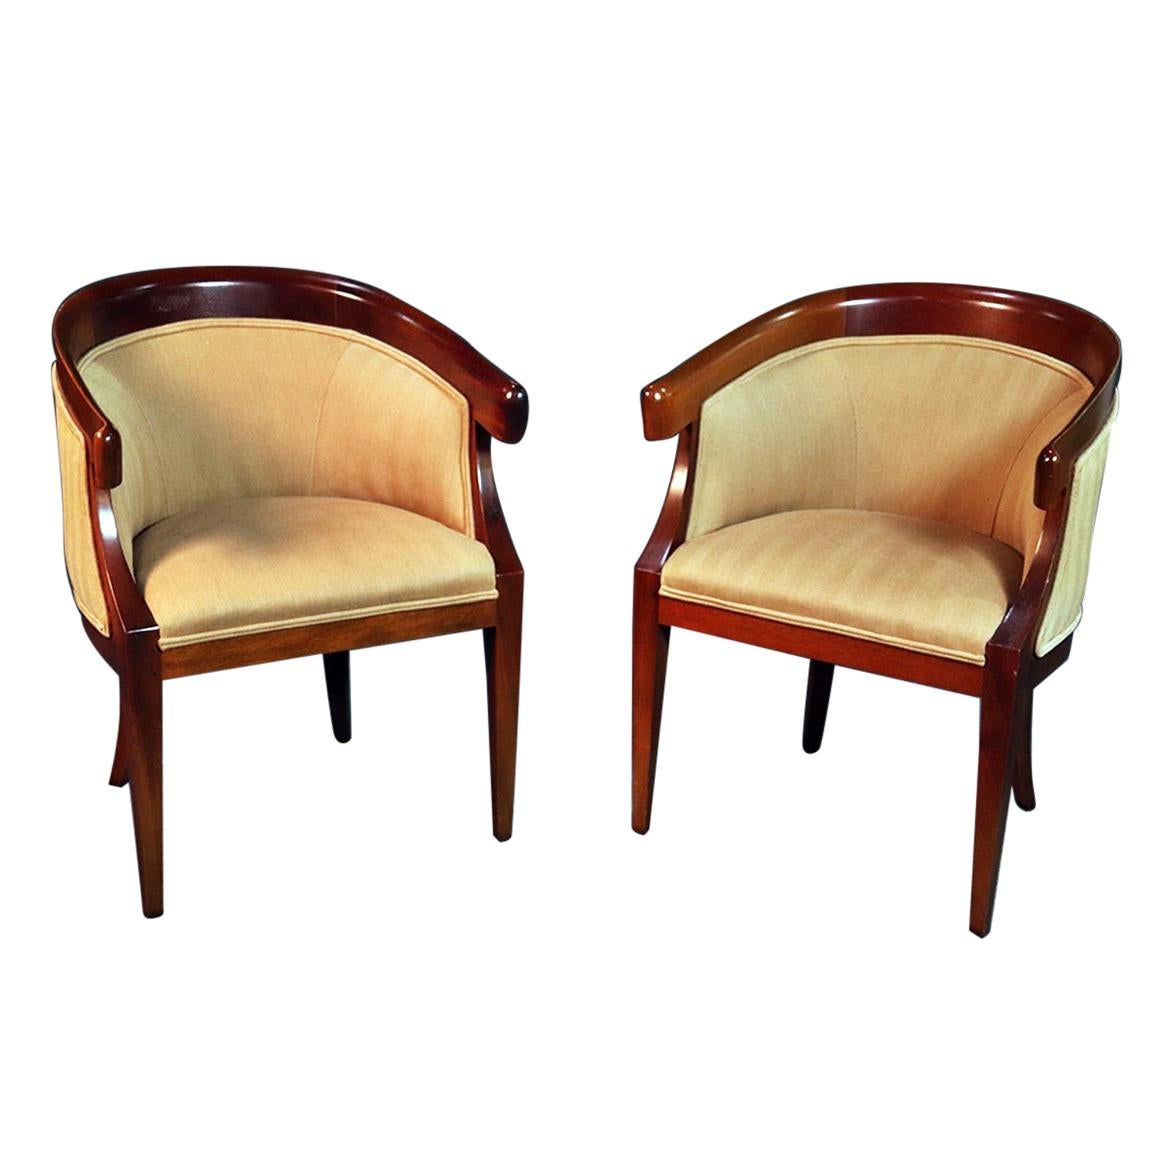 Pair of Mid-Century Modern Regency Style Club Chairs